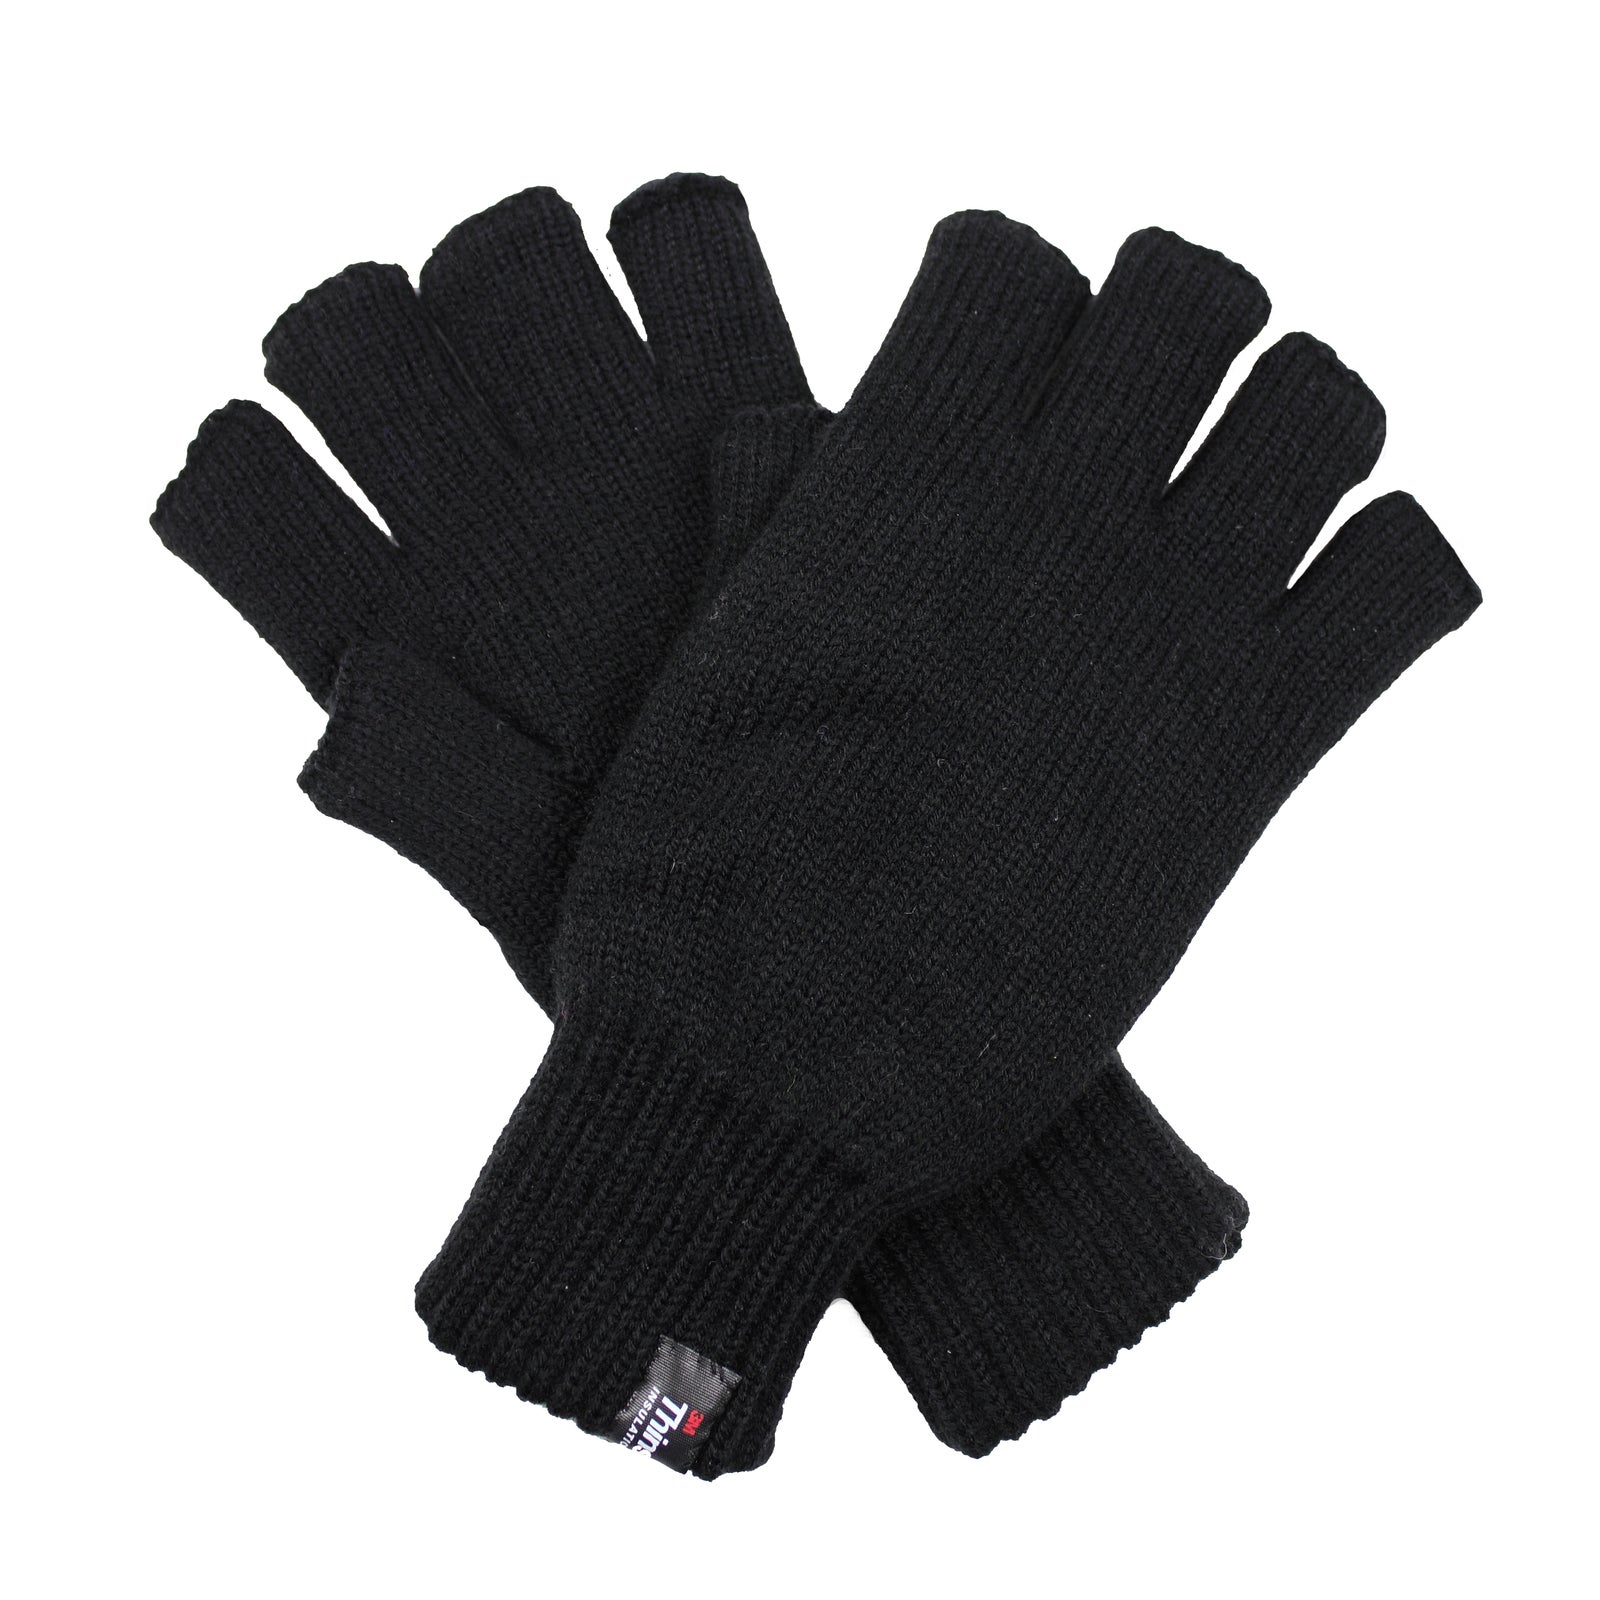 DENTS 3M THINSULATE Polar Fleece Fingerless Gloves Warm Knitted Insulation